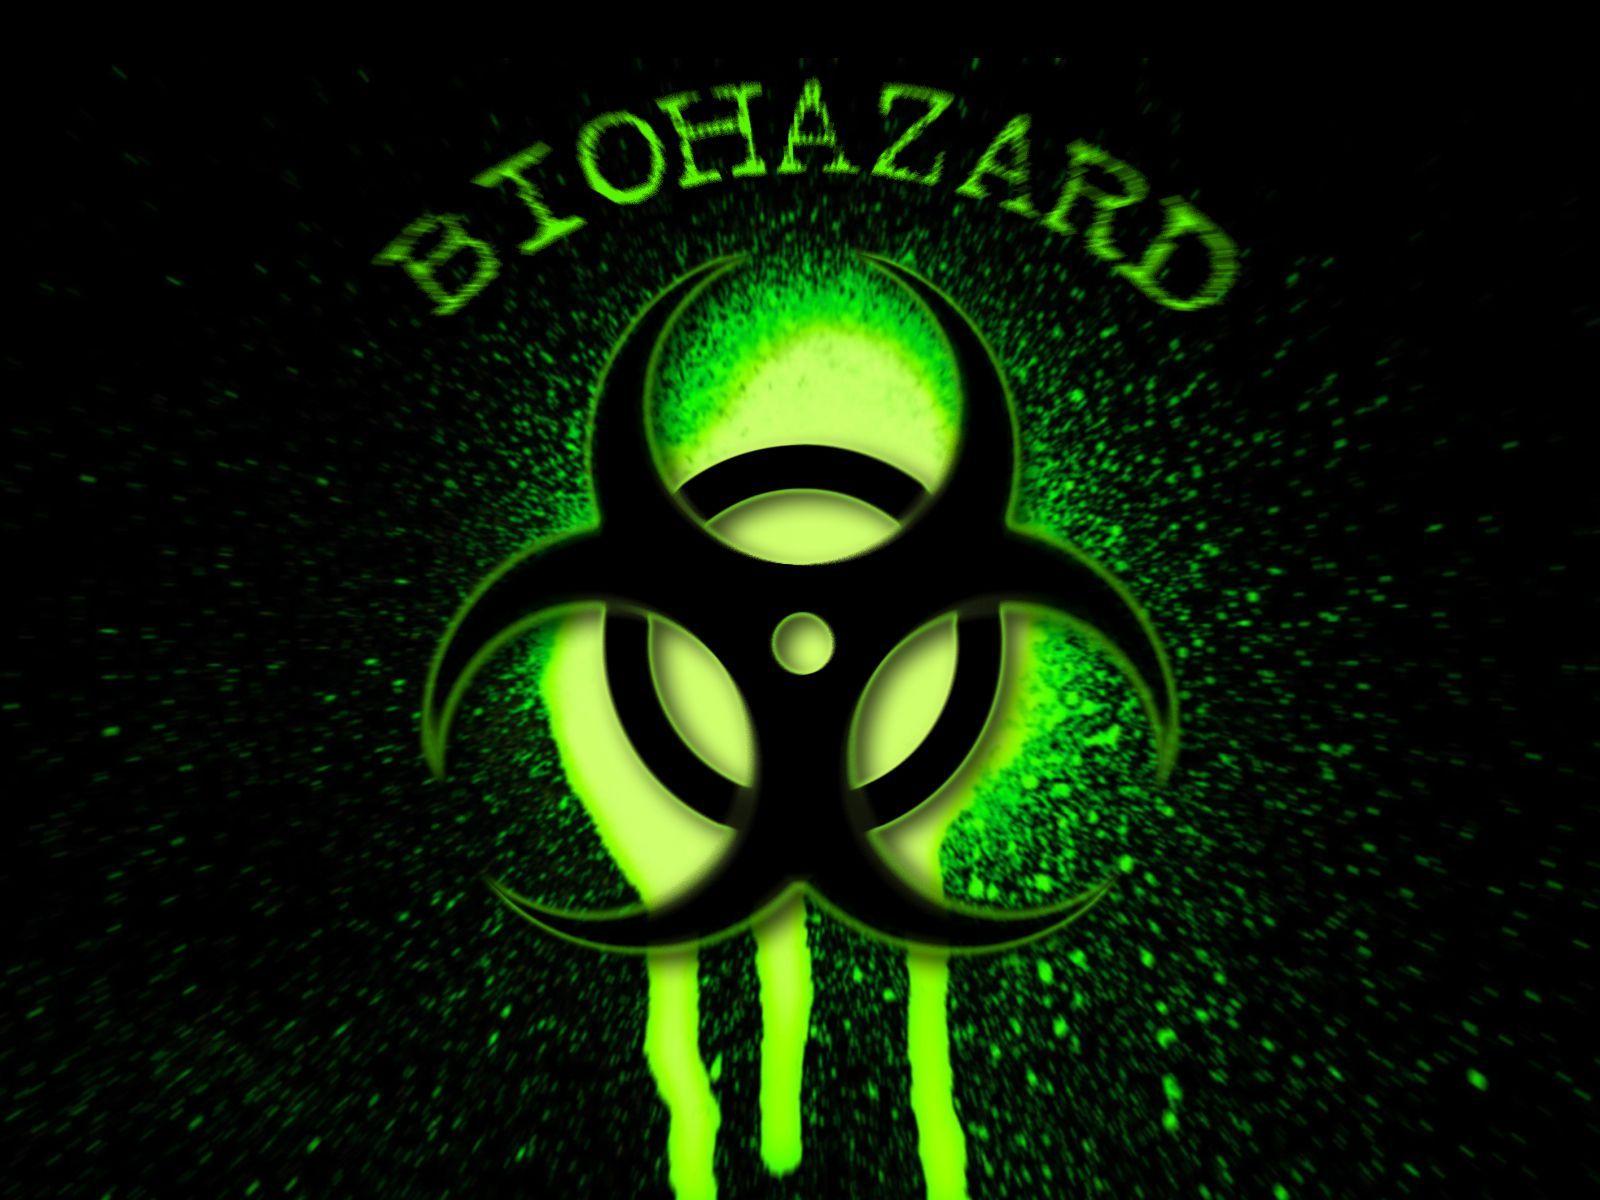 Biohazard Logo - biohazard logo | symbols; signs ; logos | Symbols, Wallpaper, Logos